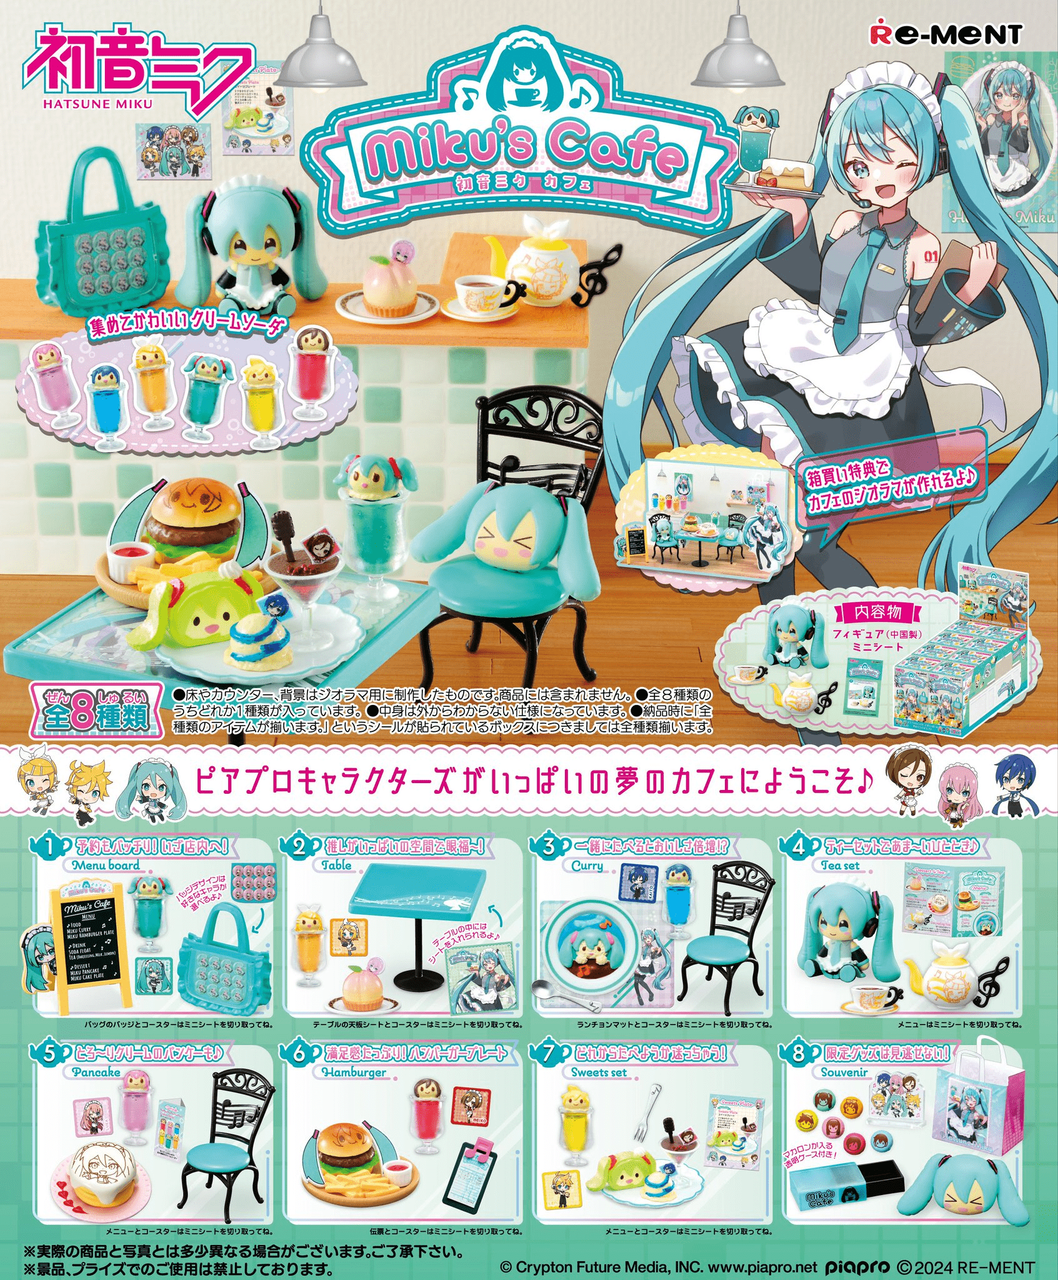 Hatsune Miku Series Miku's Cafe (Set of 8 Pieces) Re-ment